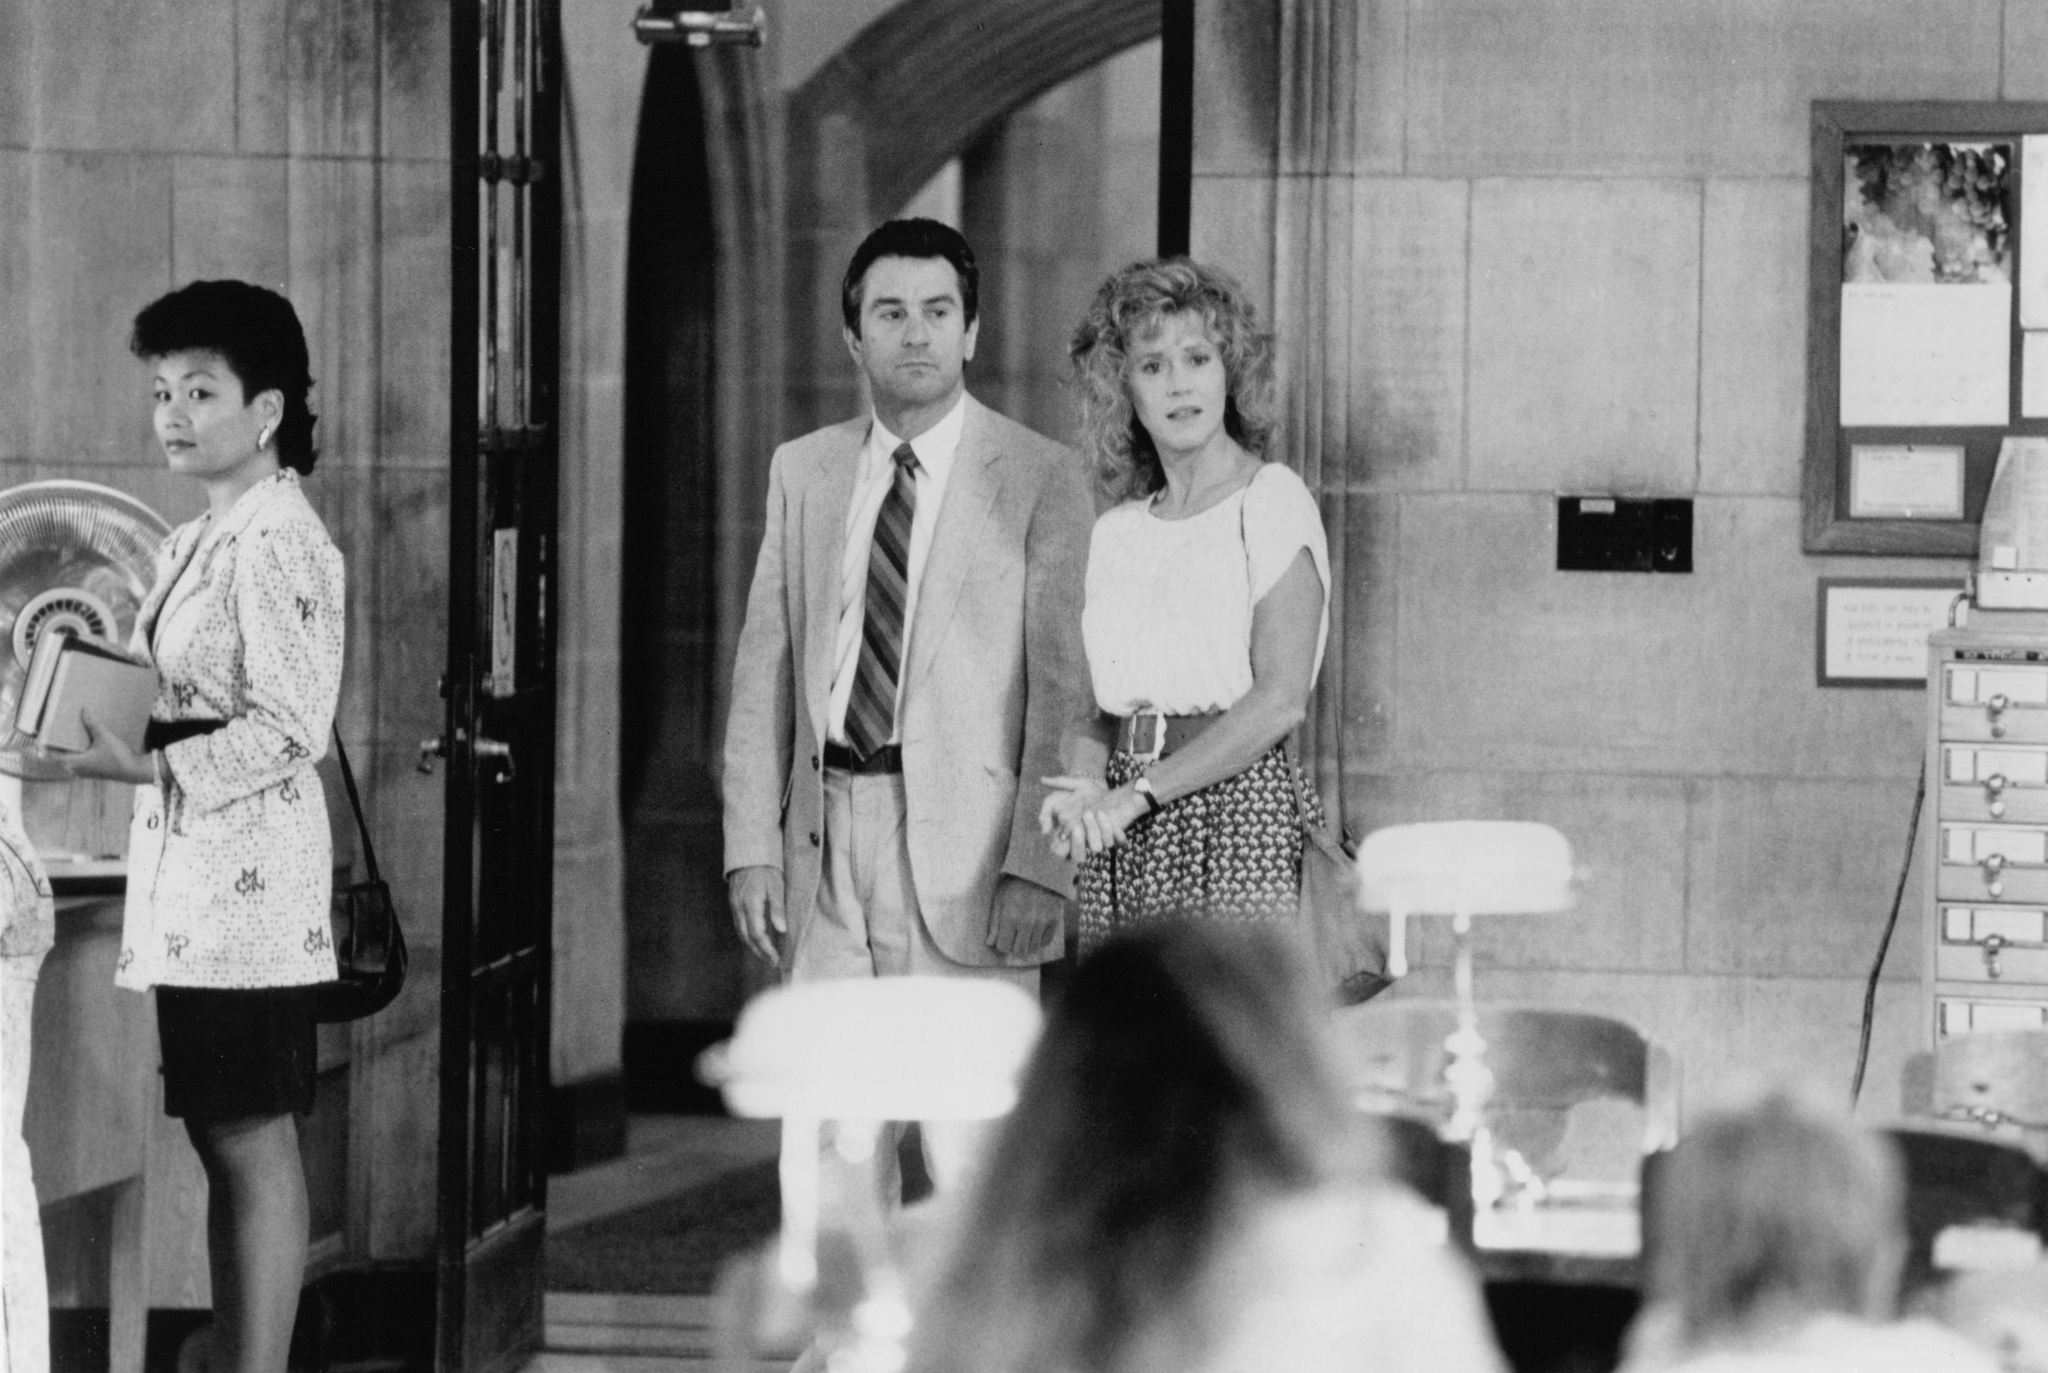 Still of Robert De Niro and Jane Fonda in Stanley & Iris (1990)